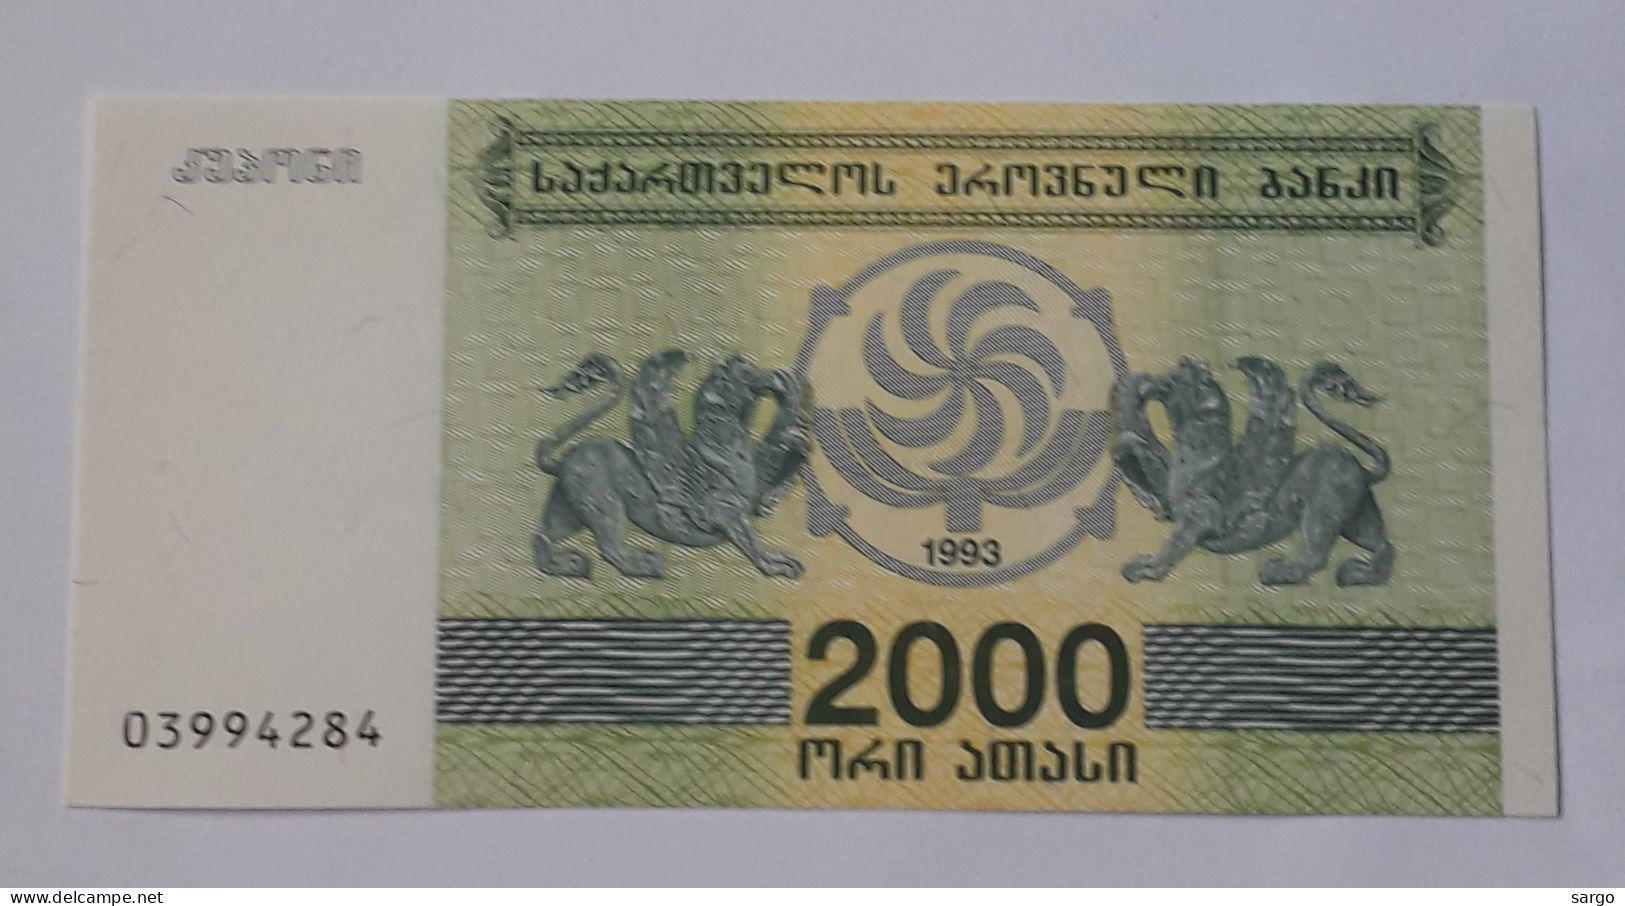 GEORGIA - 2.000 LARIS - 1993  - P 44 - UNC - BANKNOTES - PAPER MONEY - CARTAMONETA - - Géorgie